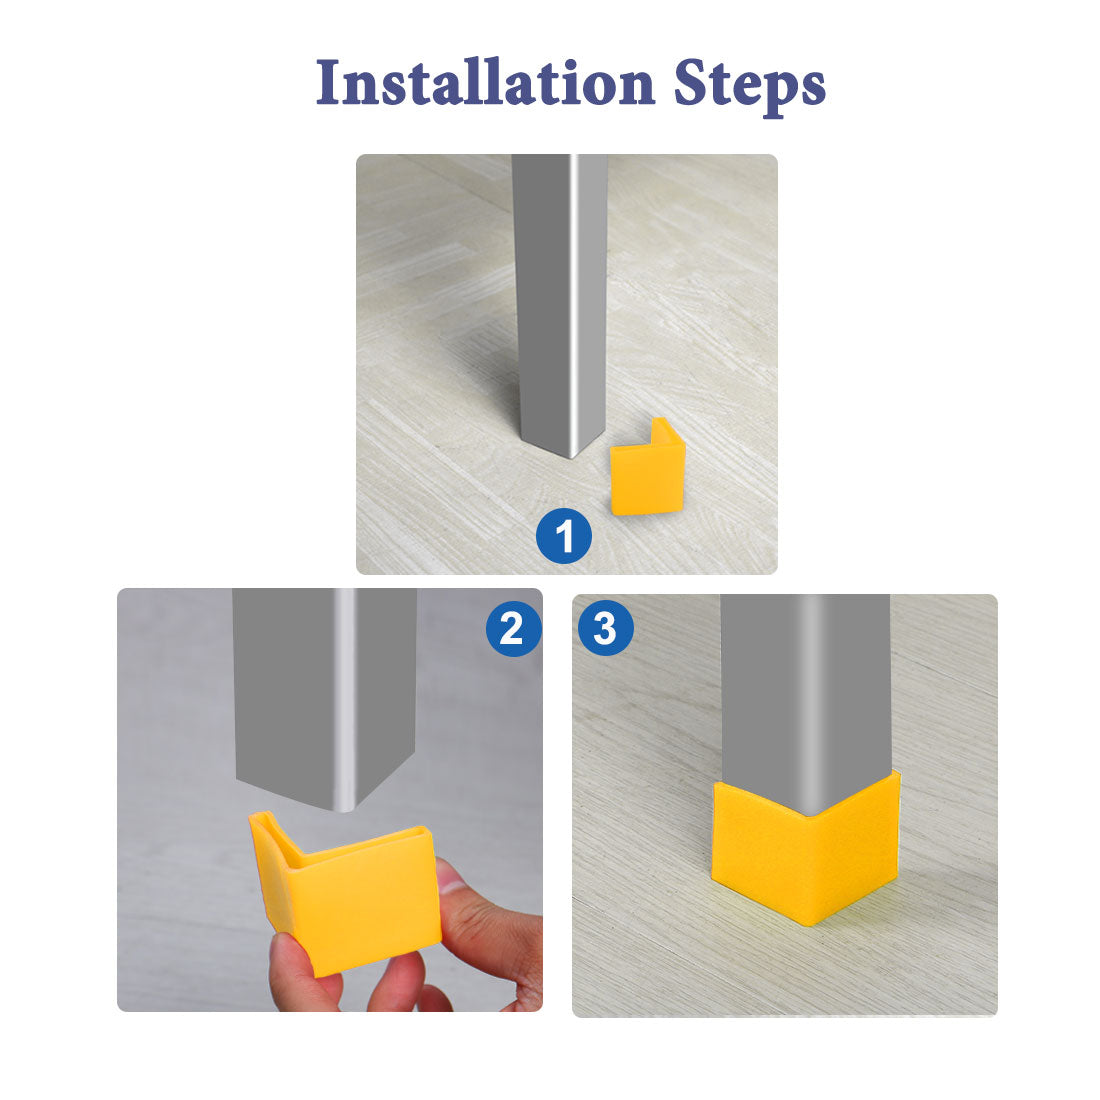 uxcell Uxcell Angle Iron Foot Pad L Shaped Plastic Leg Cap Cover Shelf Floor Protector 8 Pcs